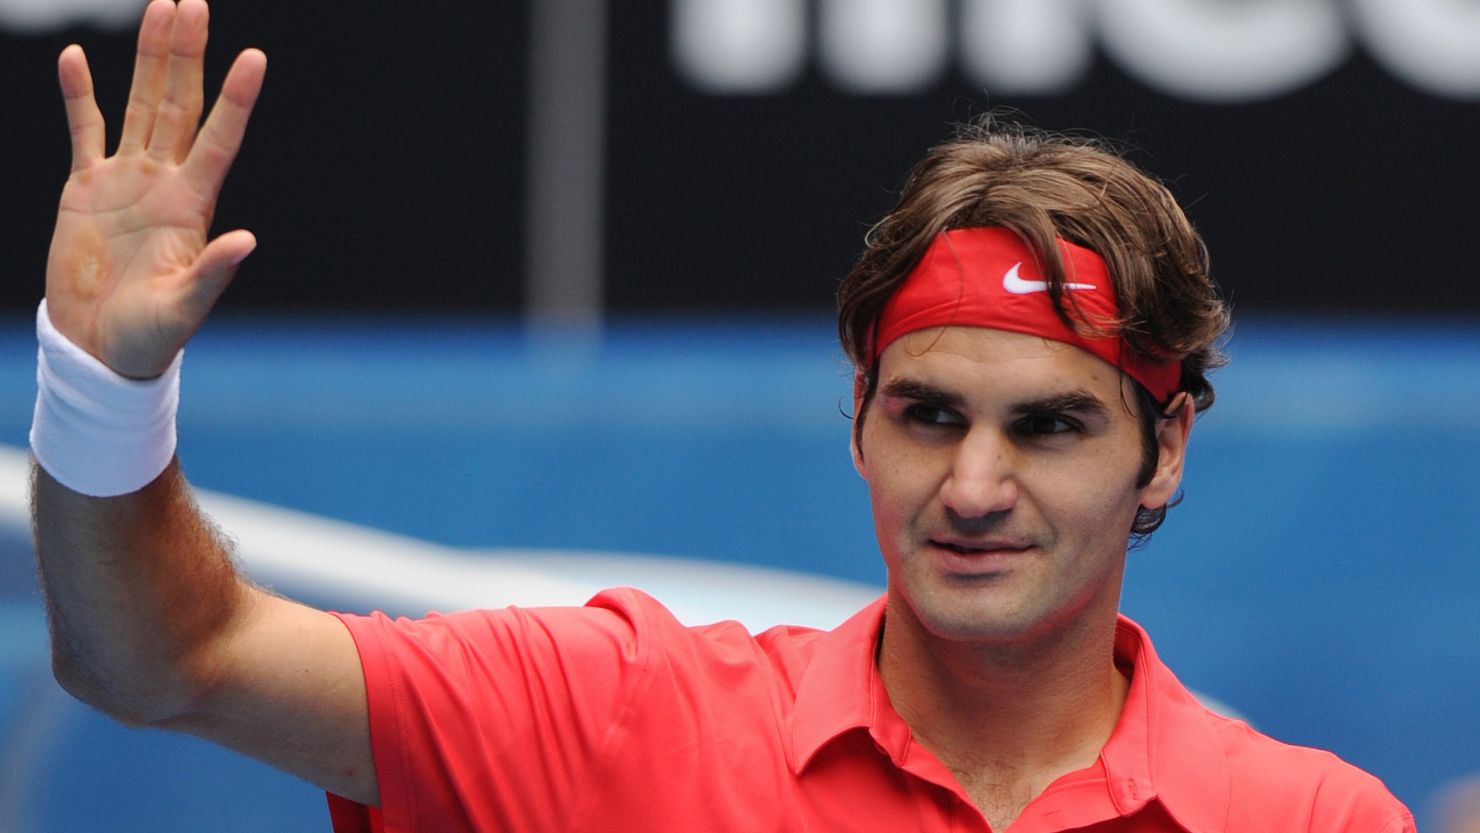 Roger Federer will face Rafael Nadal in the Australian Open semis if he beats Juan Martin Del Potro.